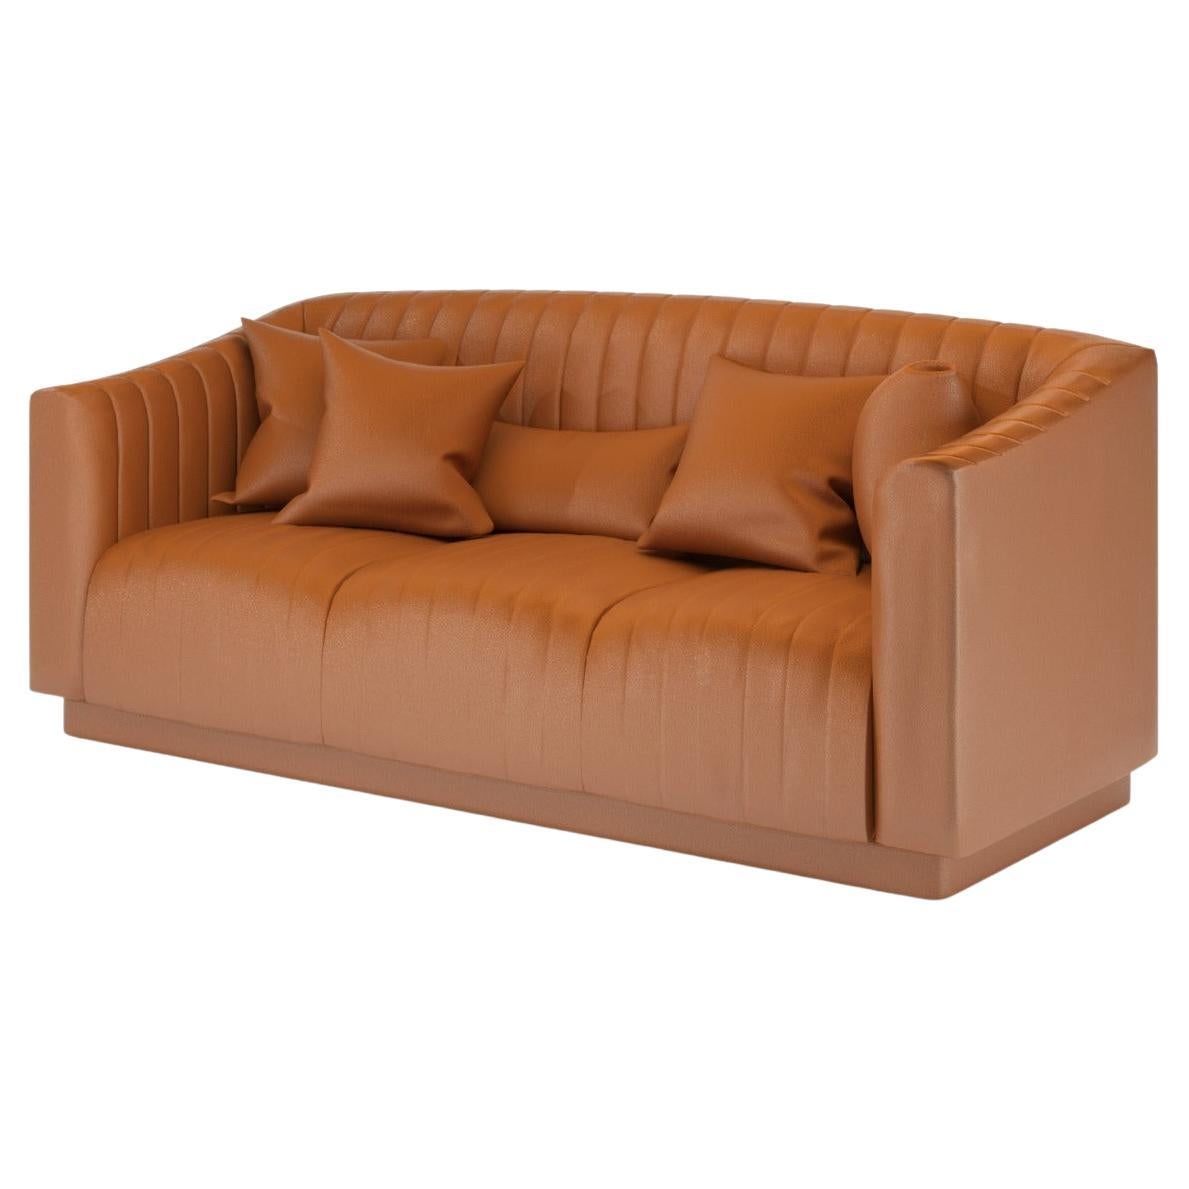 Modernes Uphostery-Sofa aus Leder